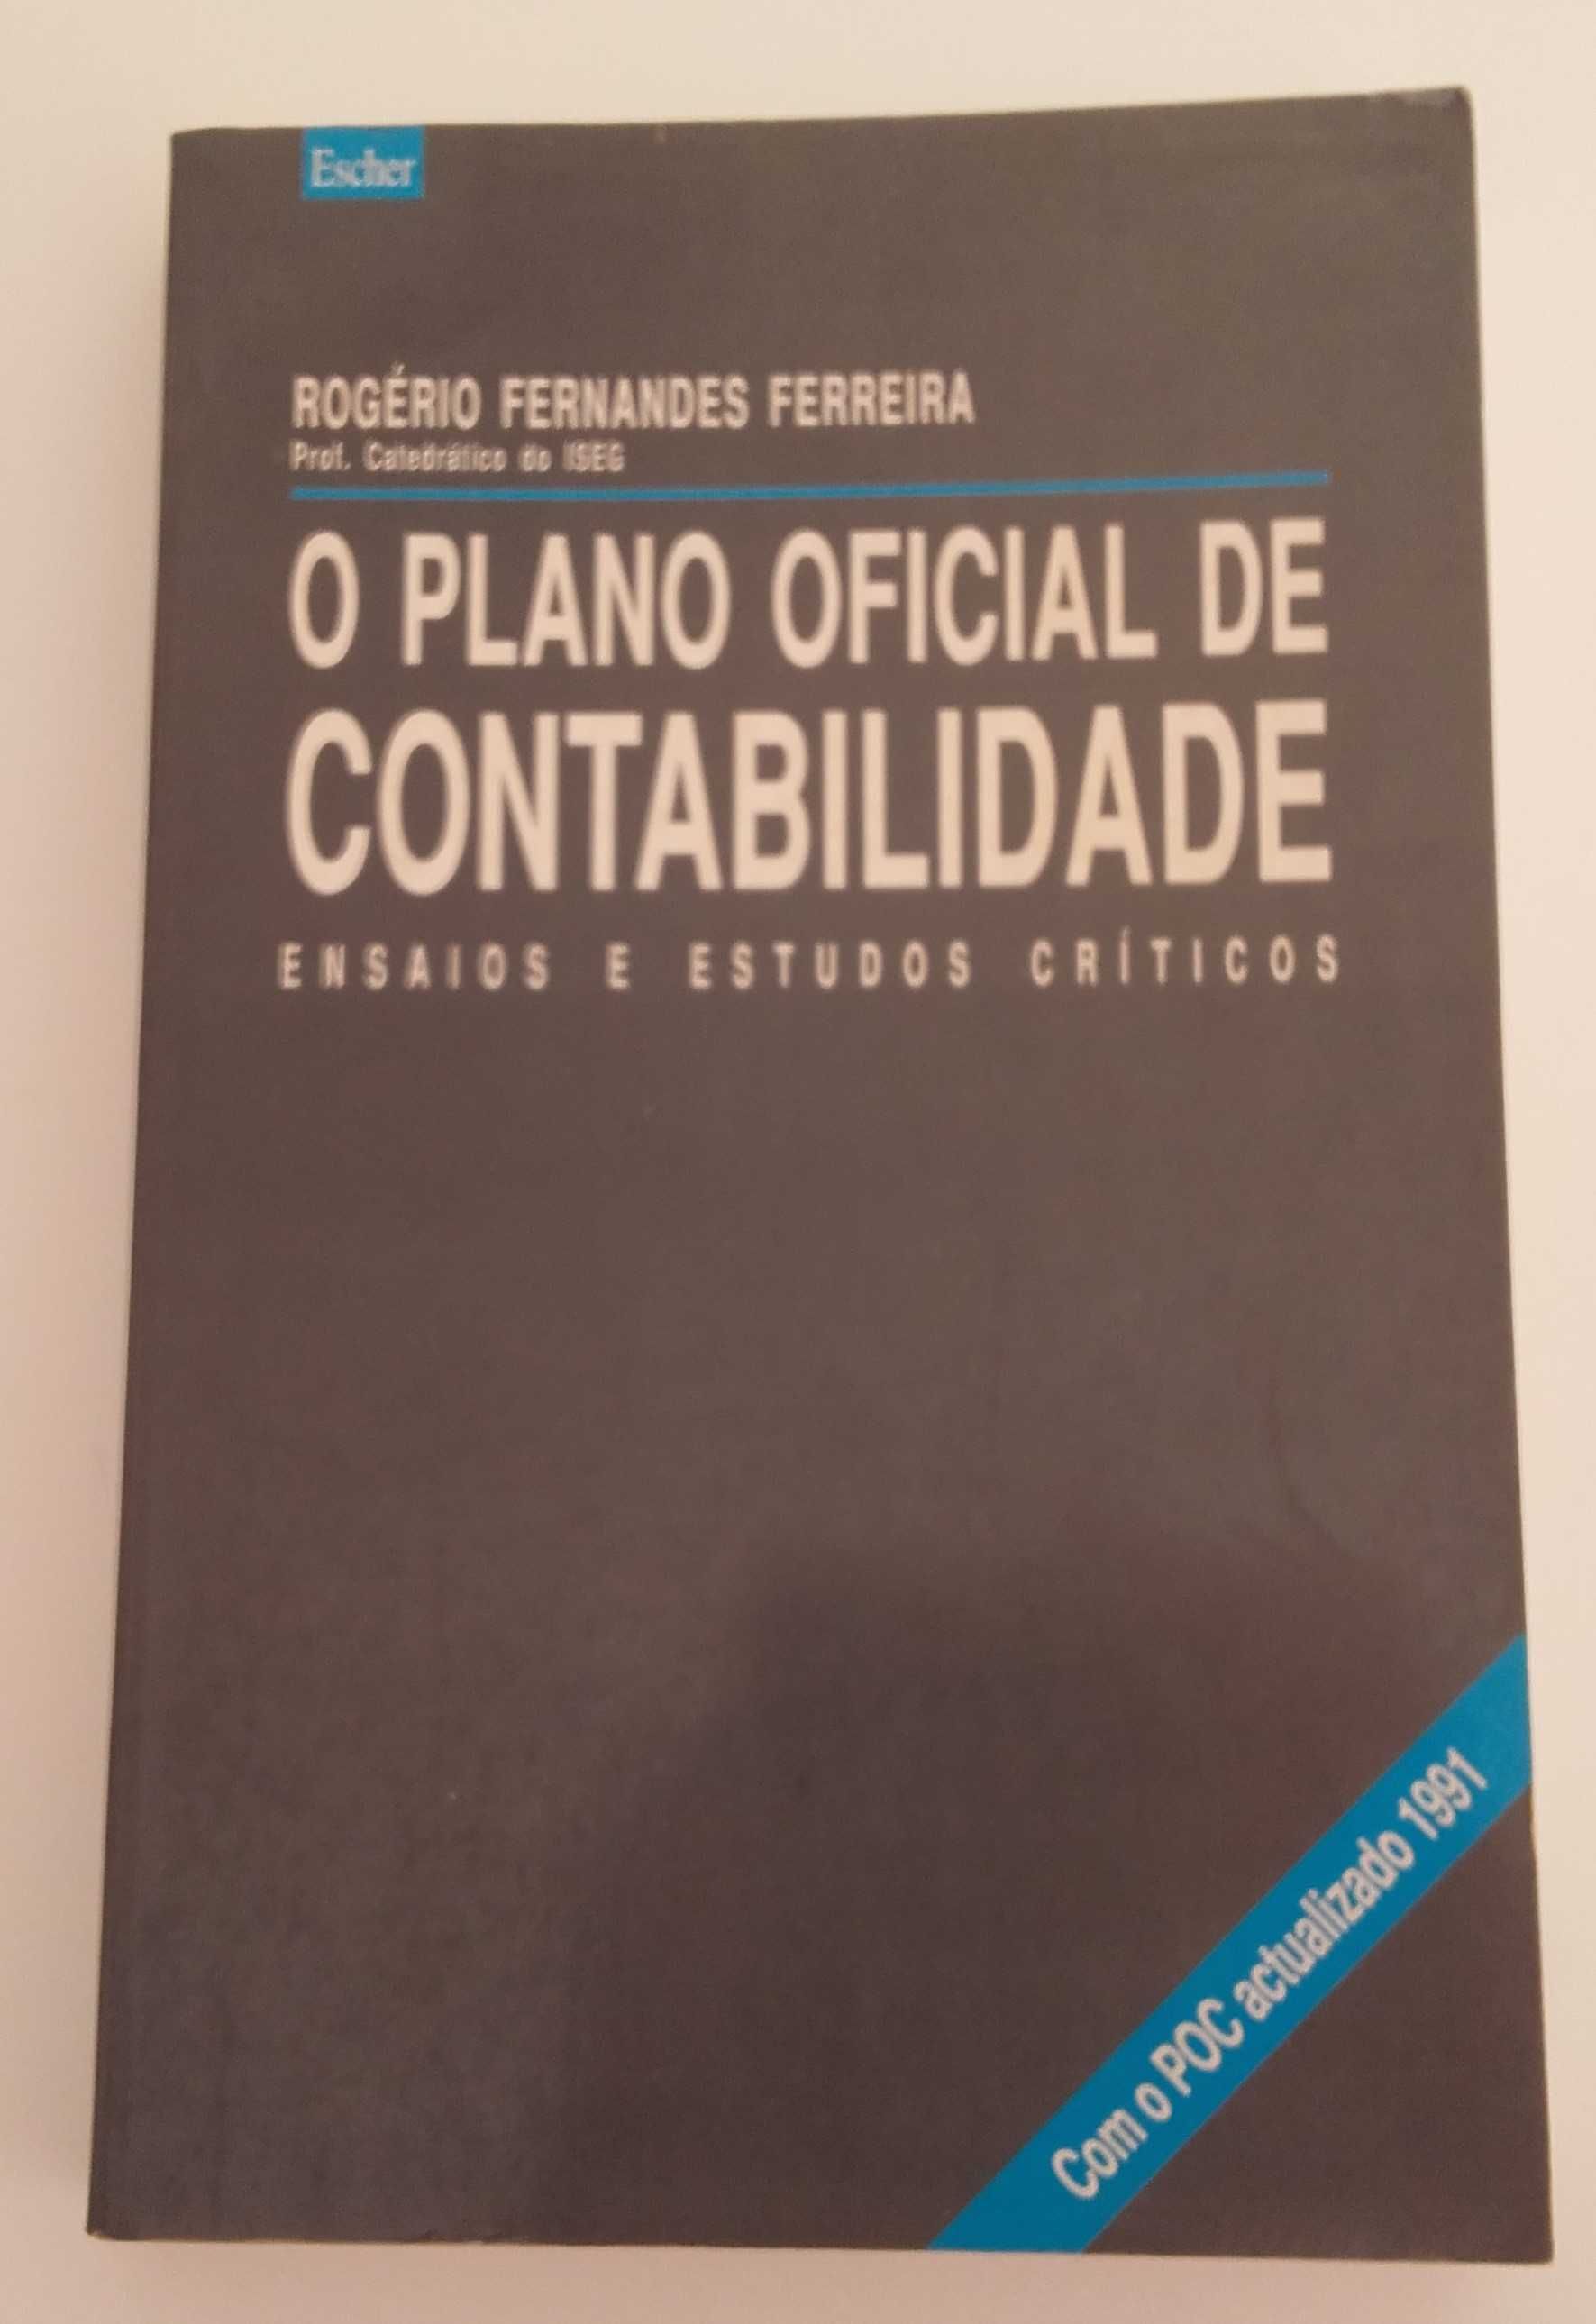 O Plano Oficial de Contabilidade - Rogério Fernandes Ferreira